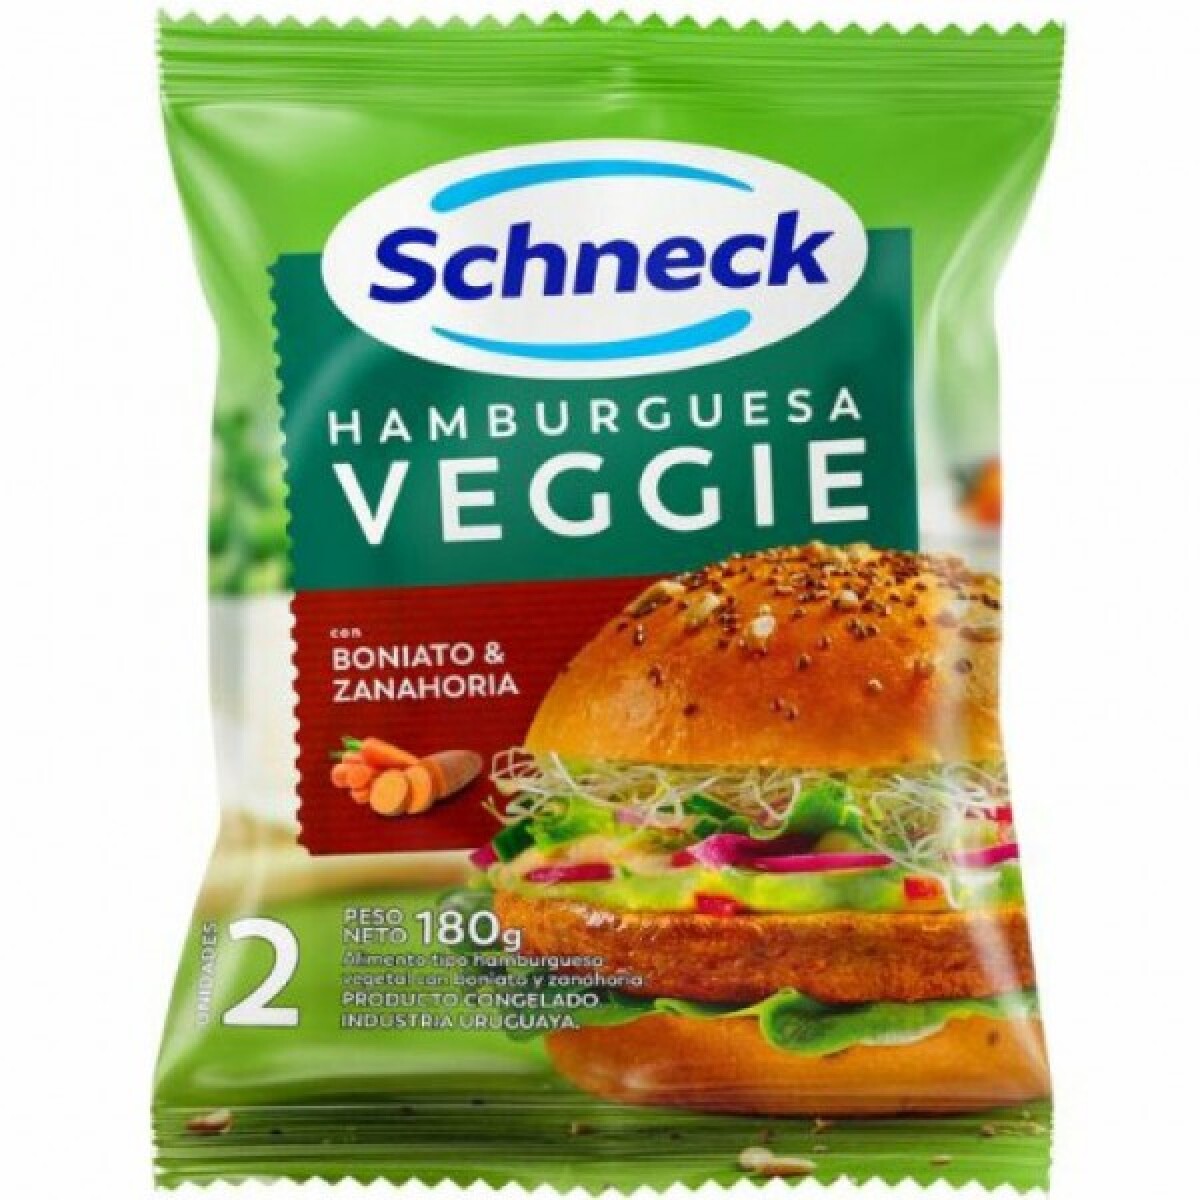 Hamburguesas Schneck Veggie de Boniato y Zanahoria - 2 uds. 